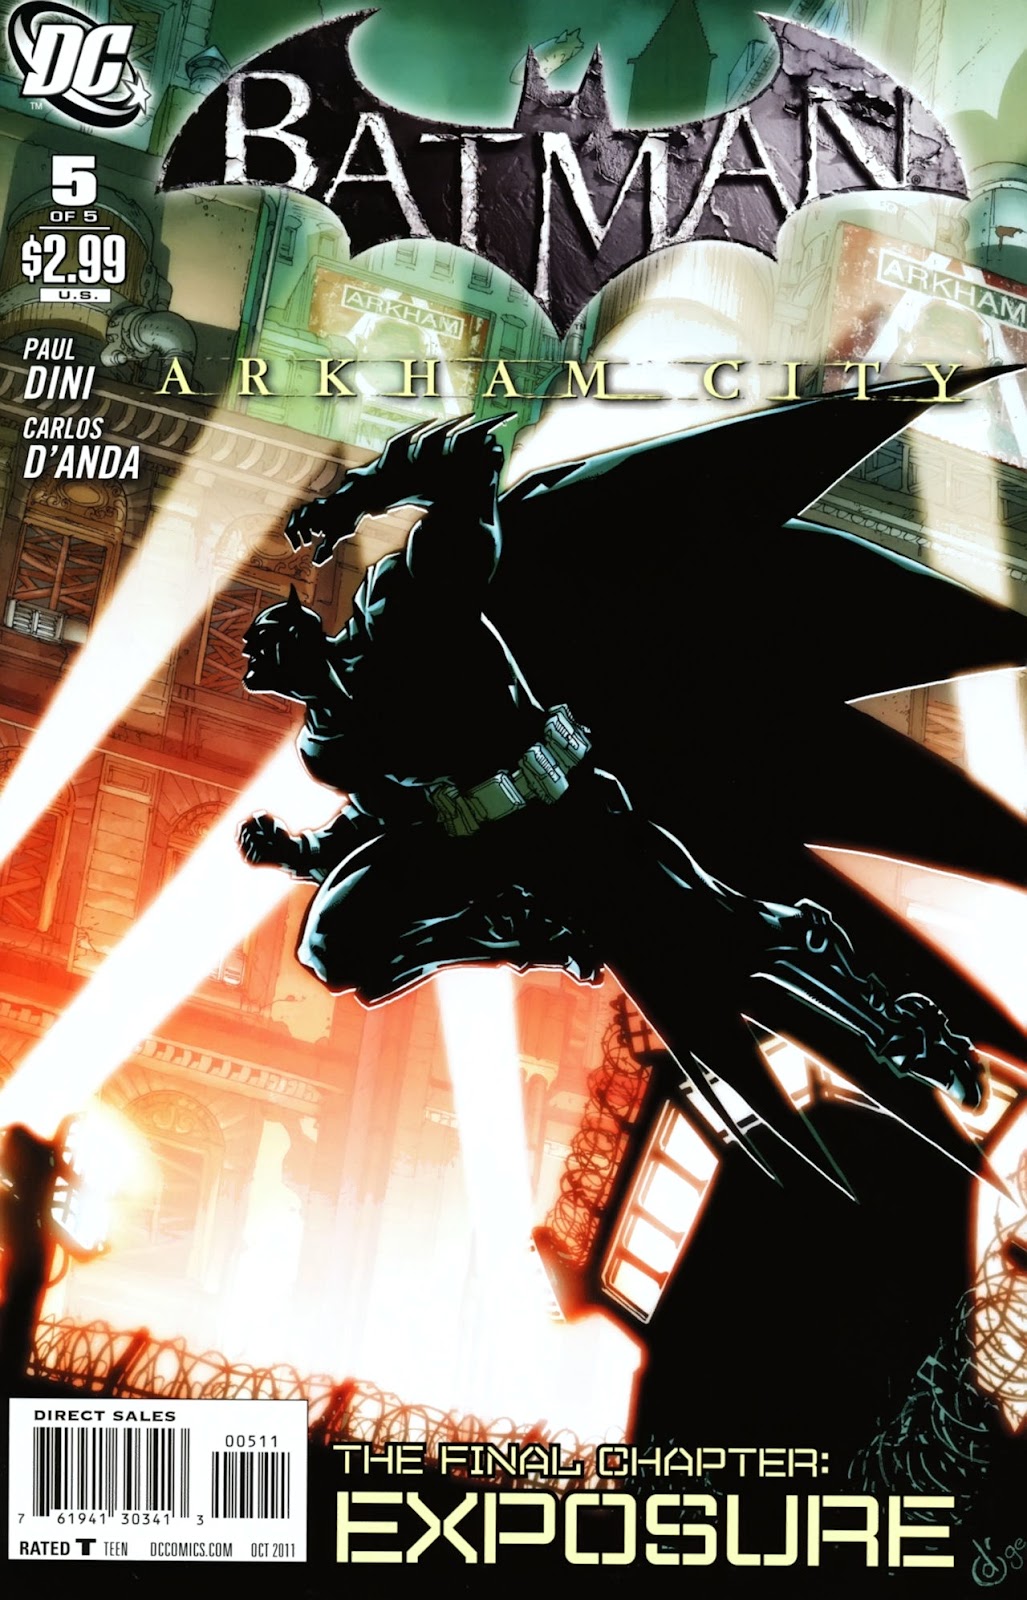 Batman Arkham City Issue 5 | Viewcomic reading comics online ...